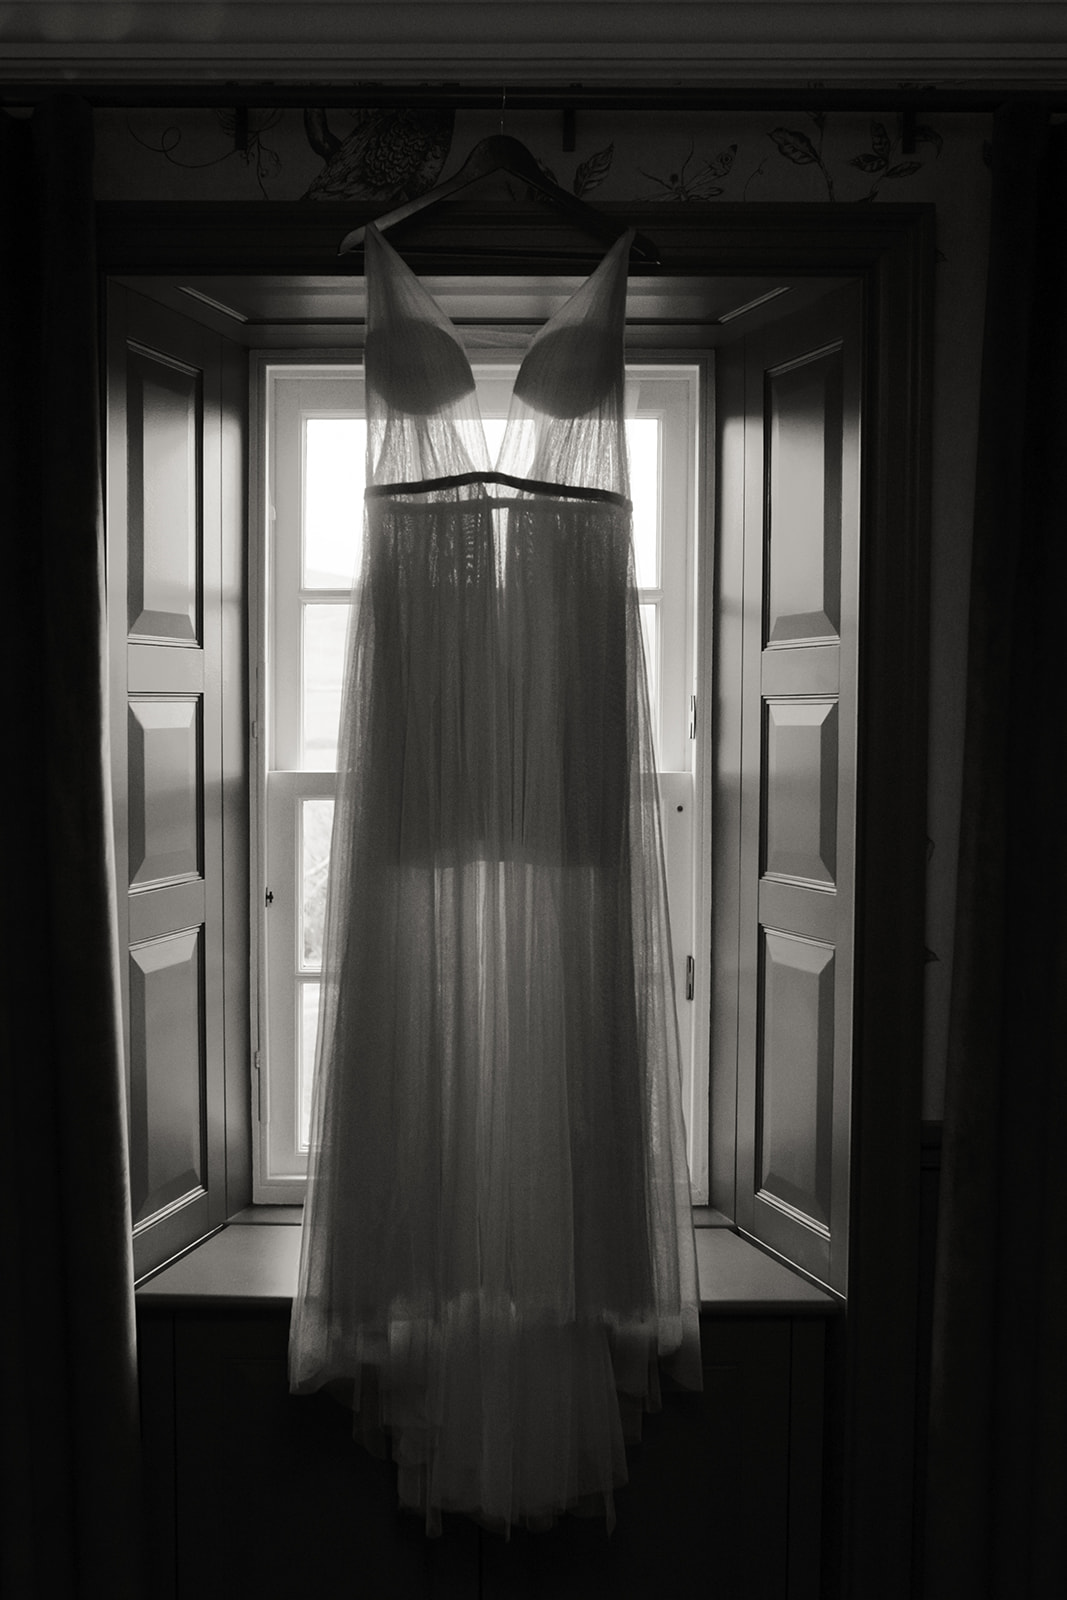 Elopement dress hanging in a window